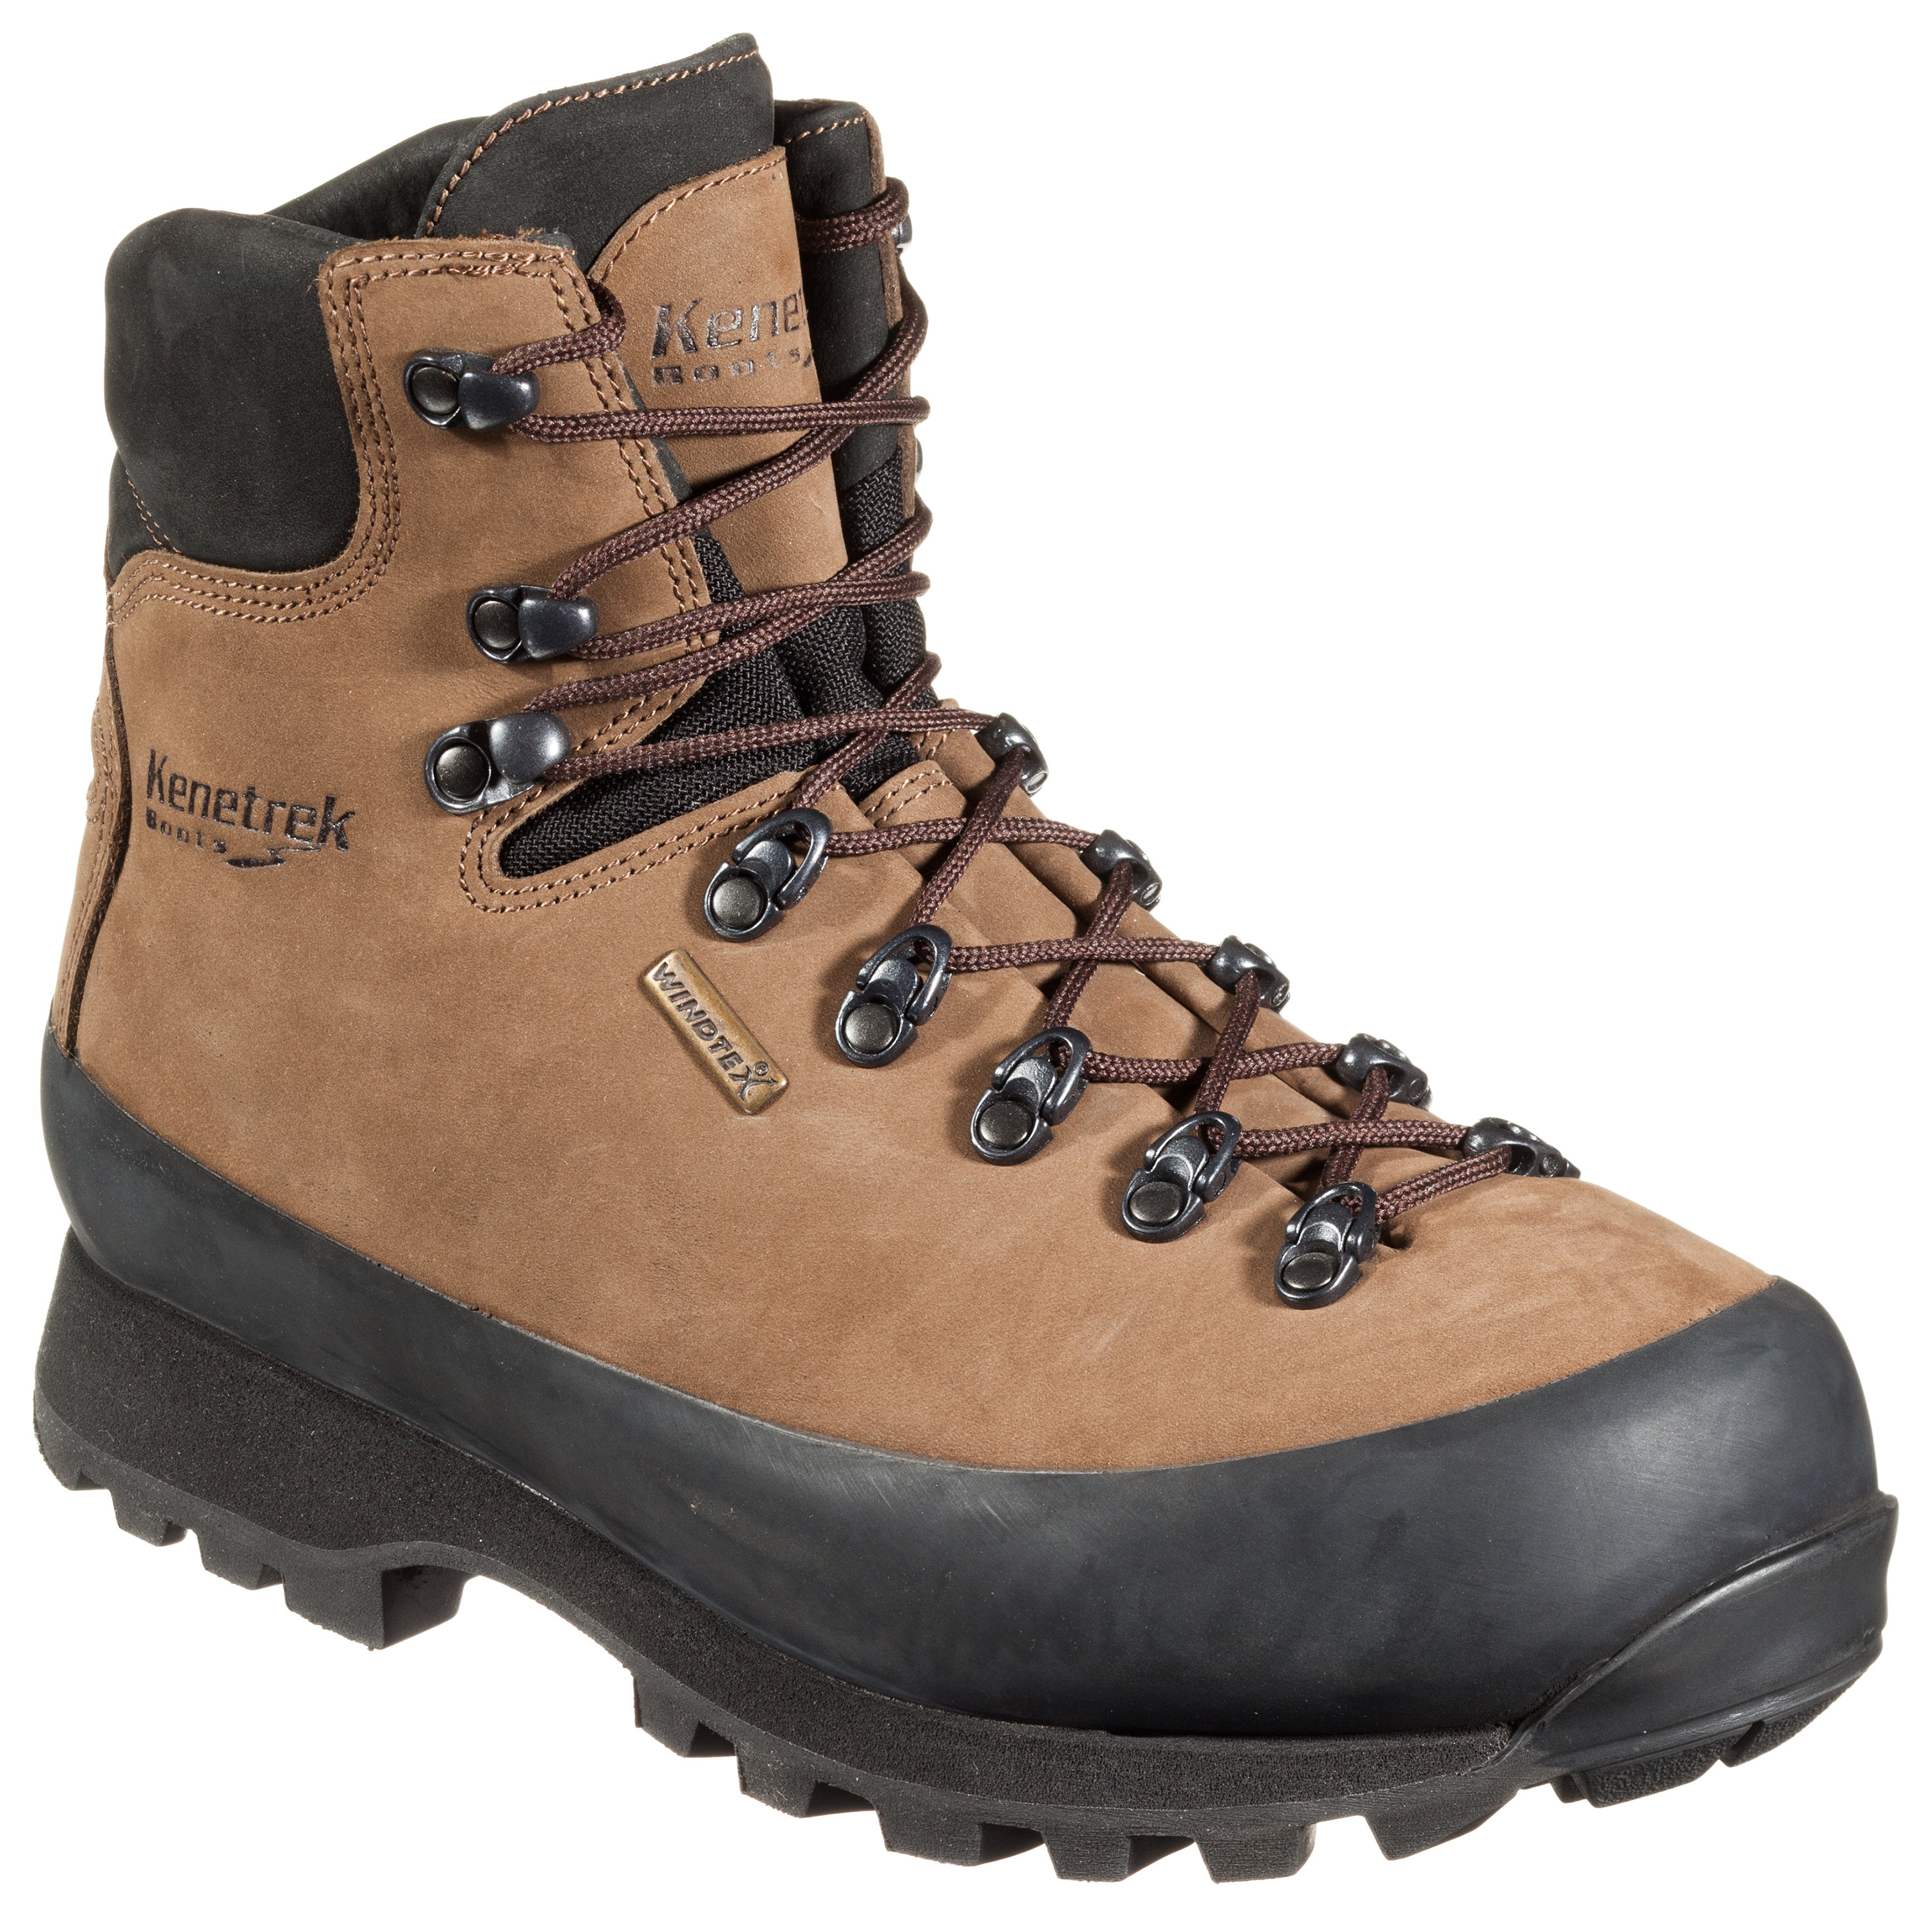 Kenetrek Hardscrabble Waterproof Hiking Boots for Men - Brown - 10M